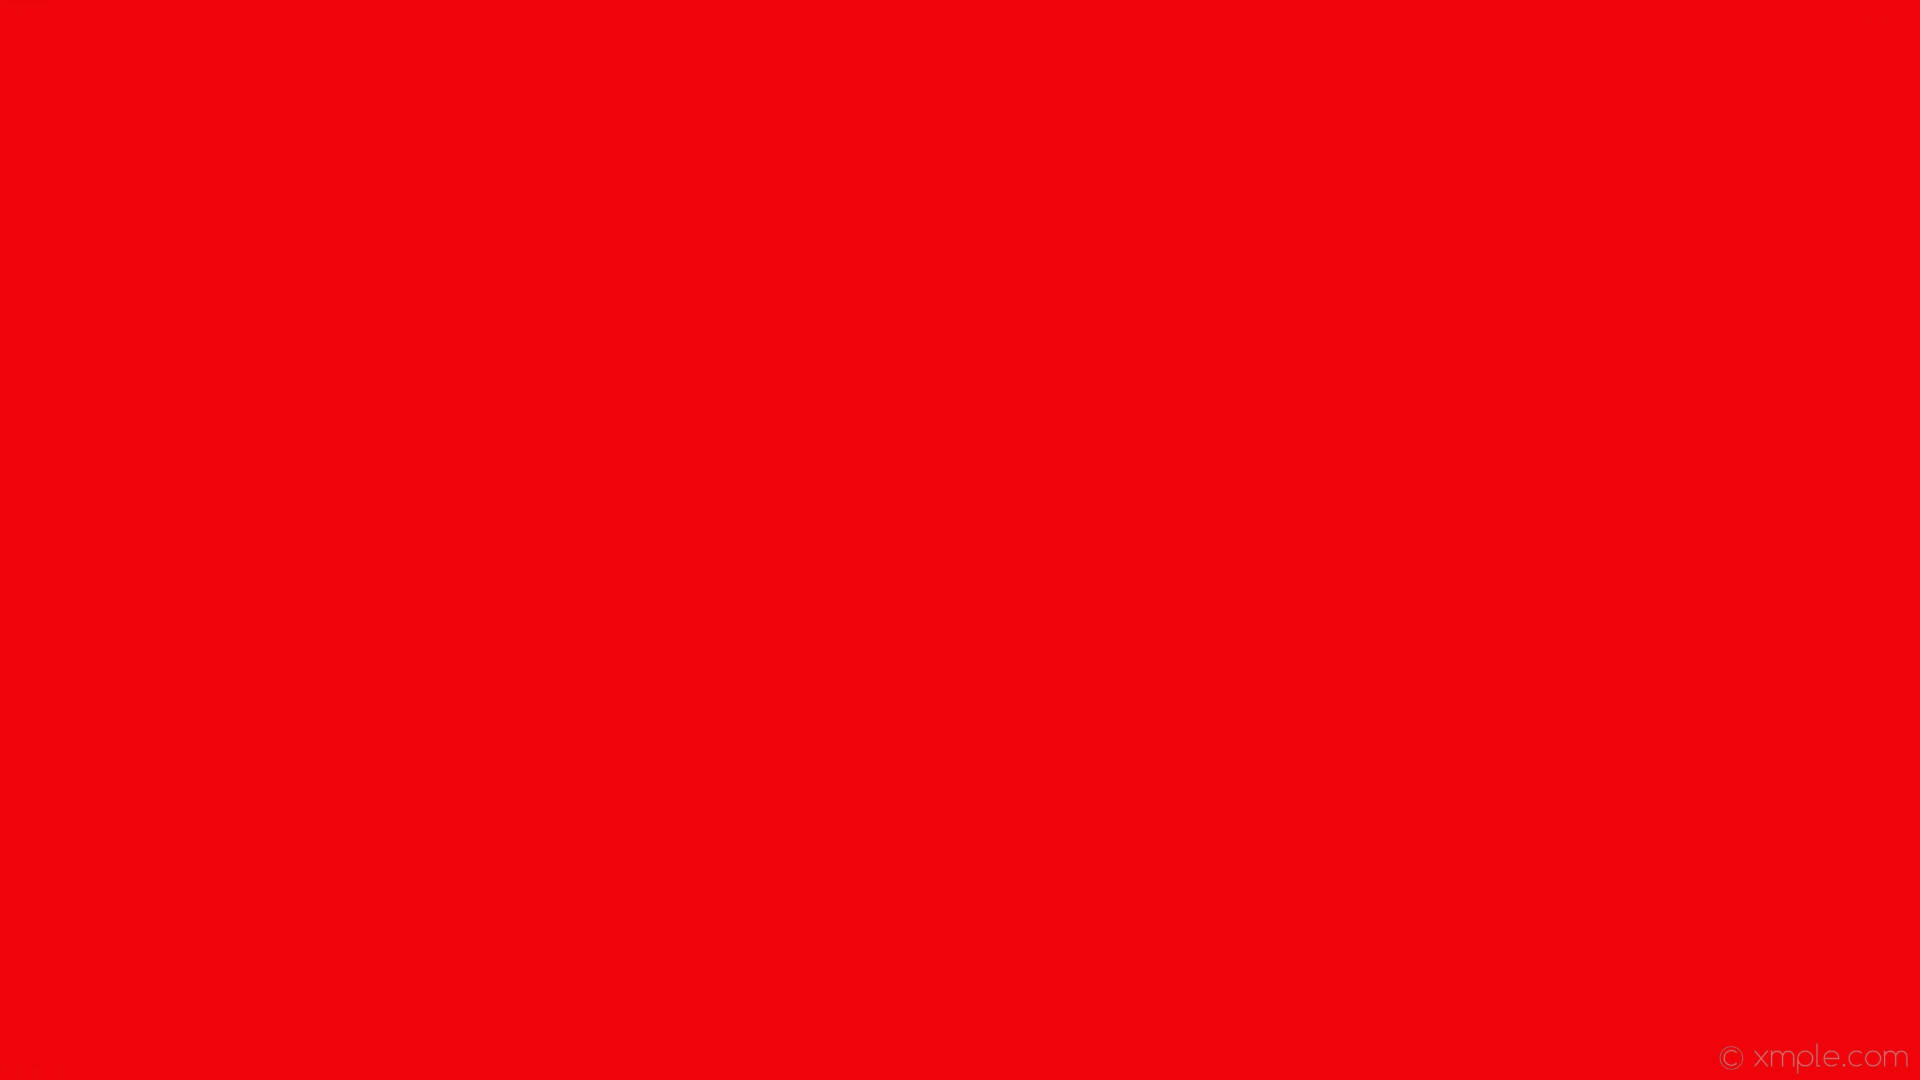 Plain Red Scarlet Wallpaper